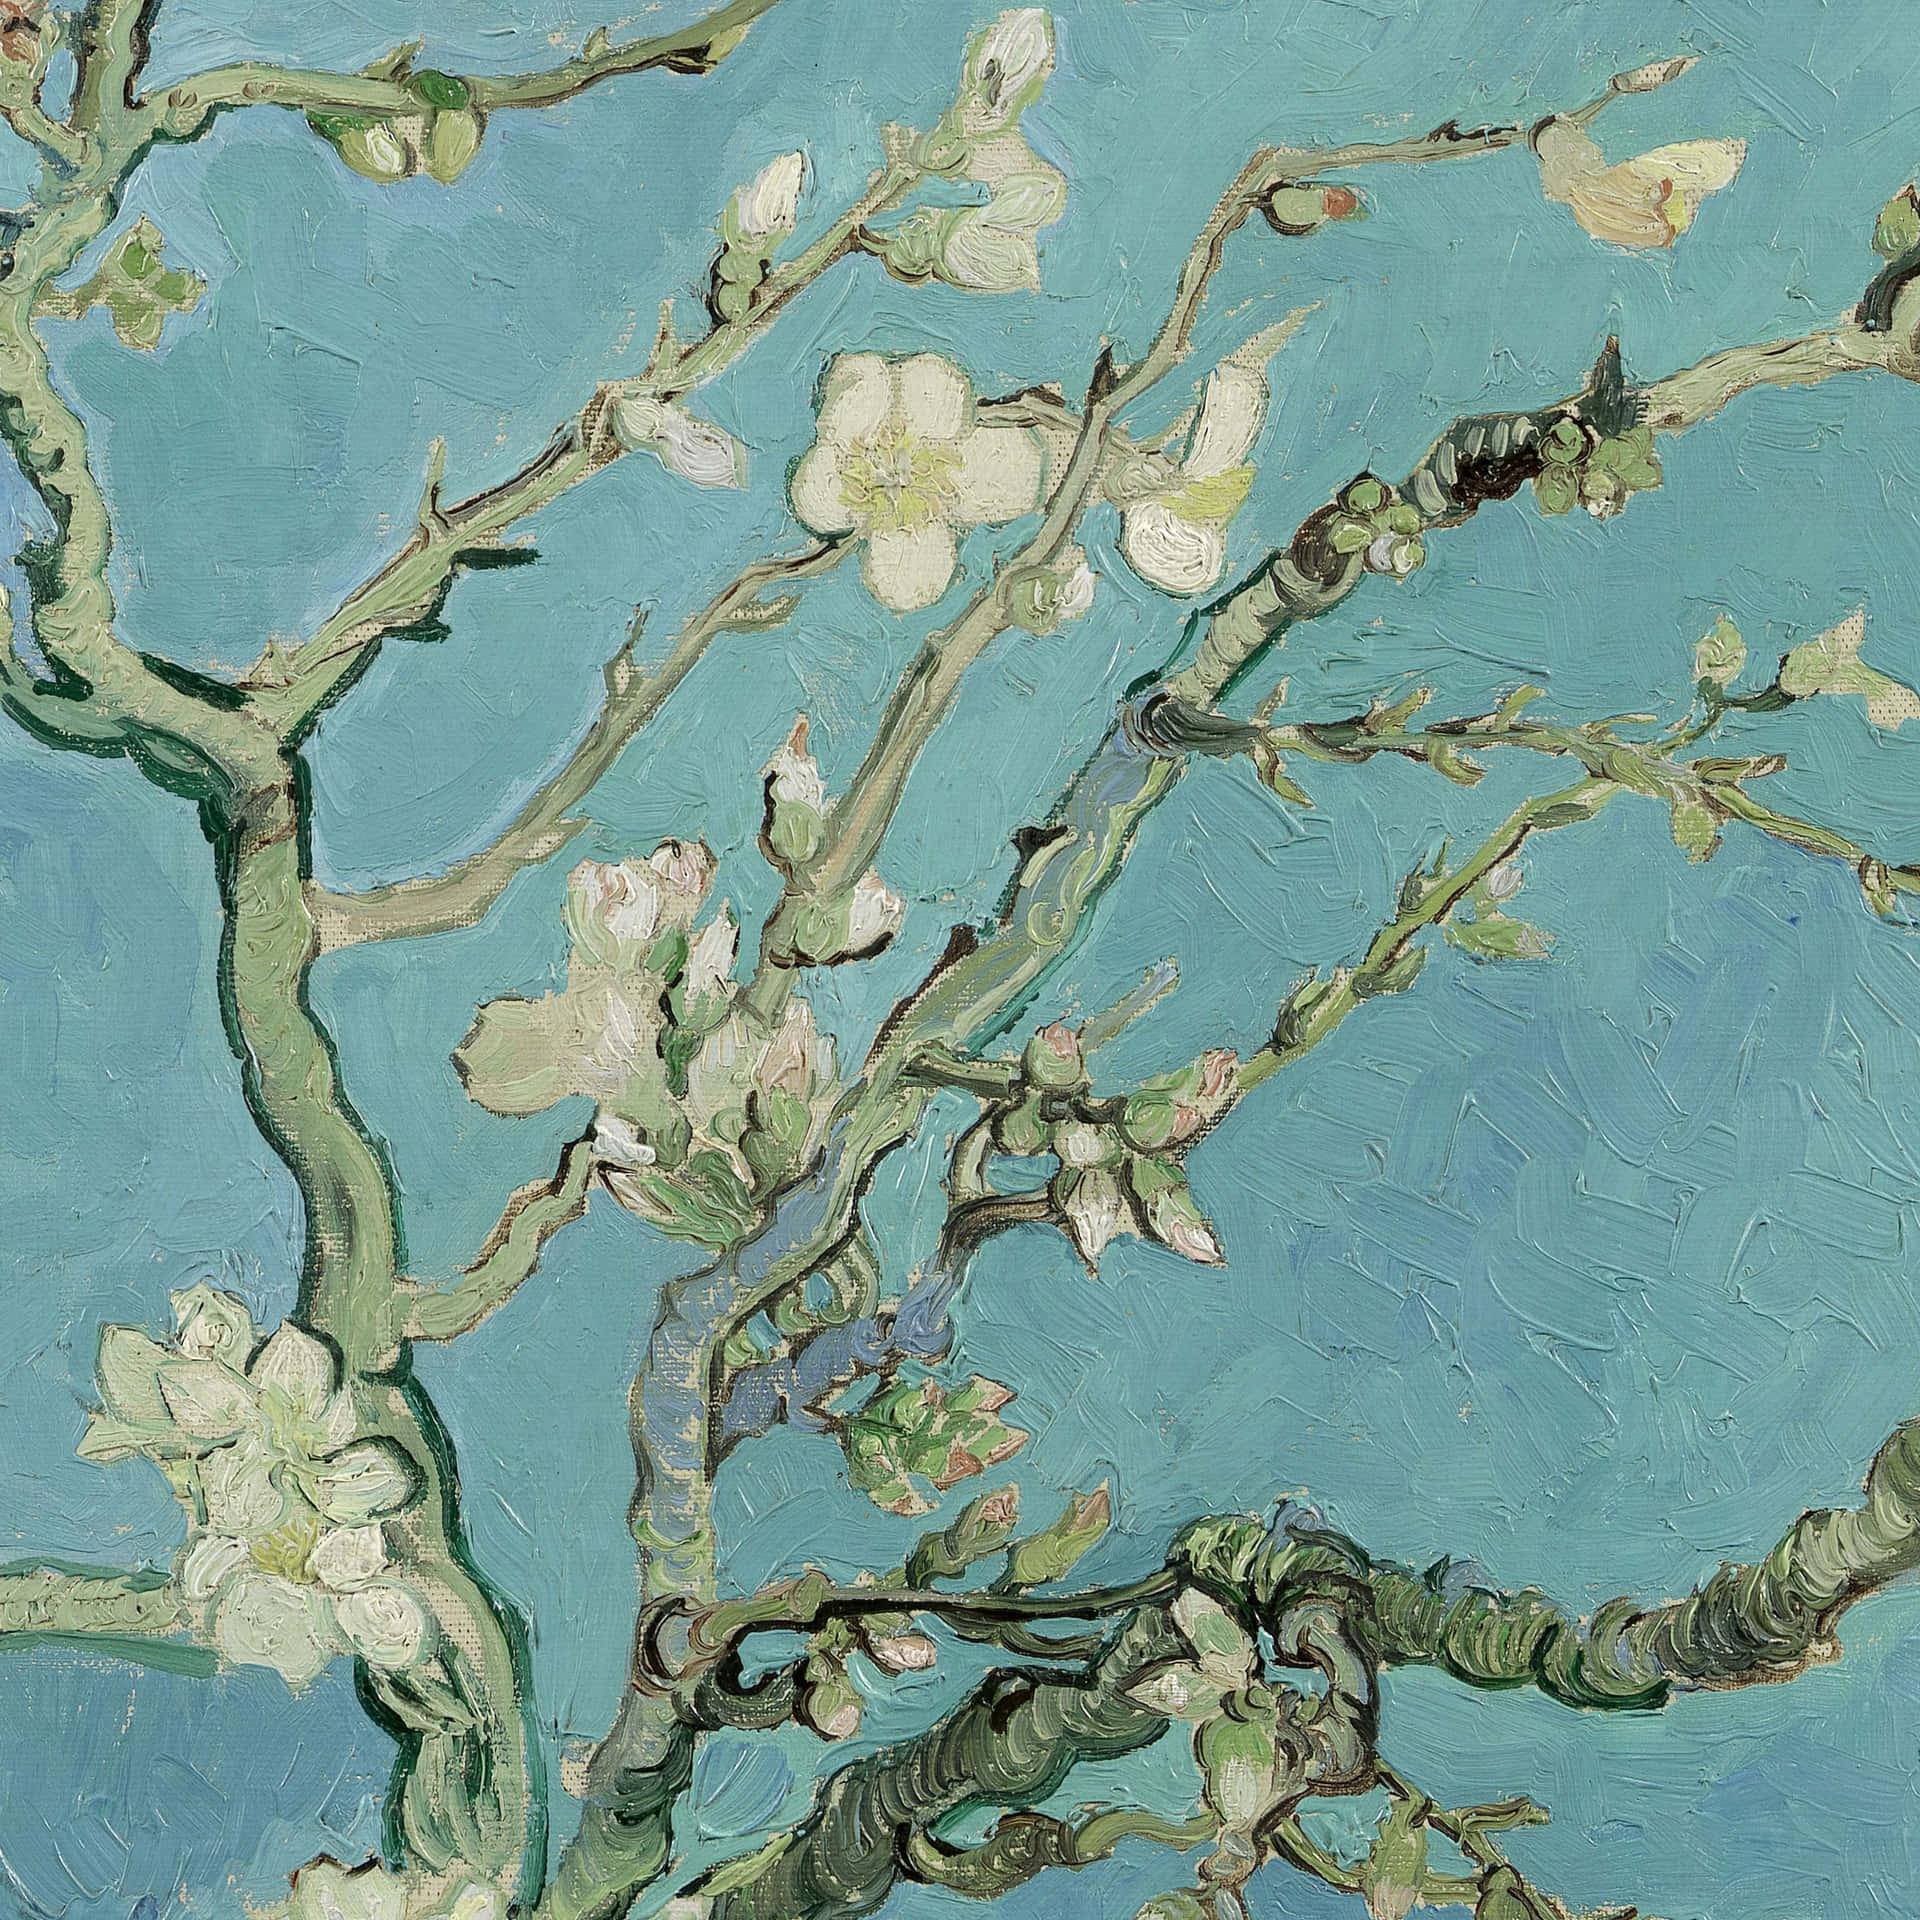 Vincentvan Goghs 